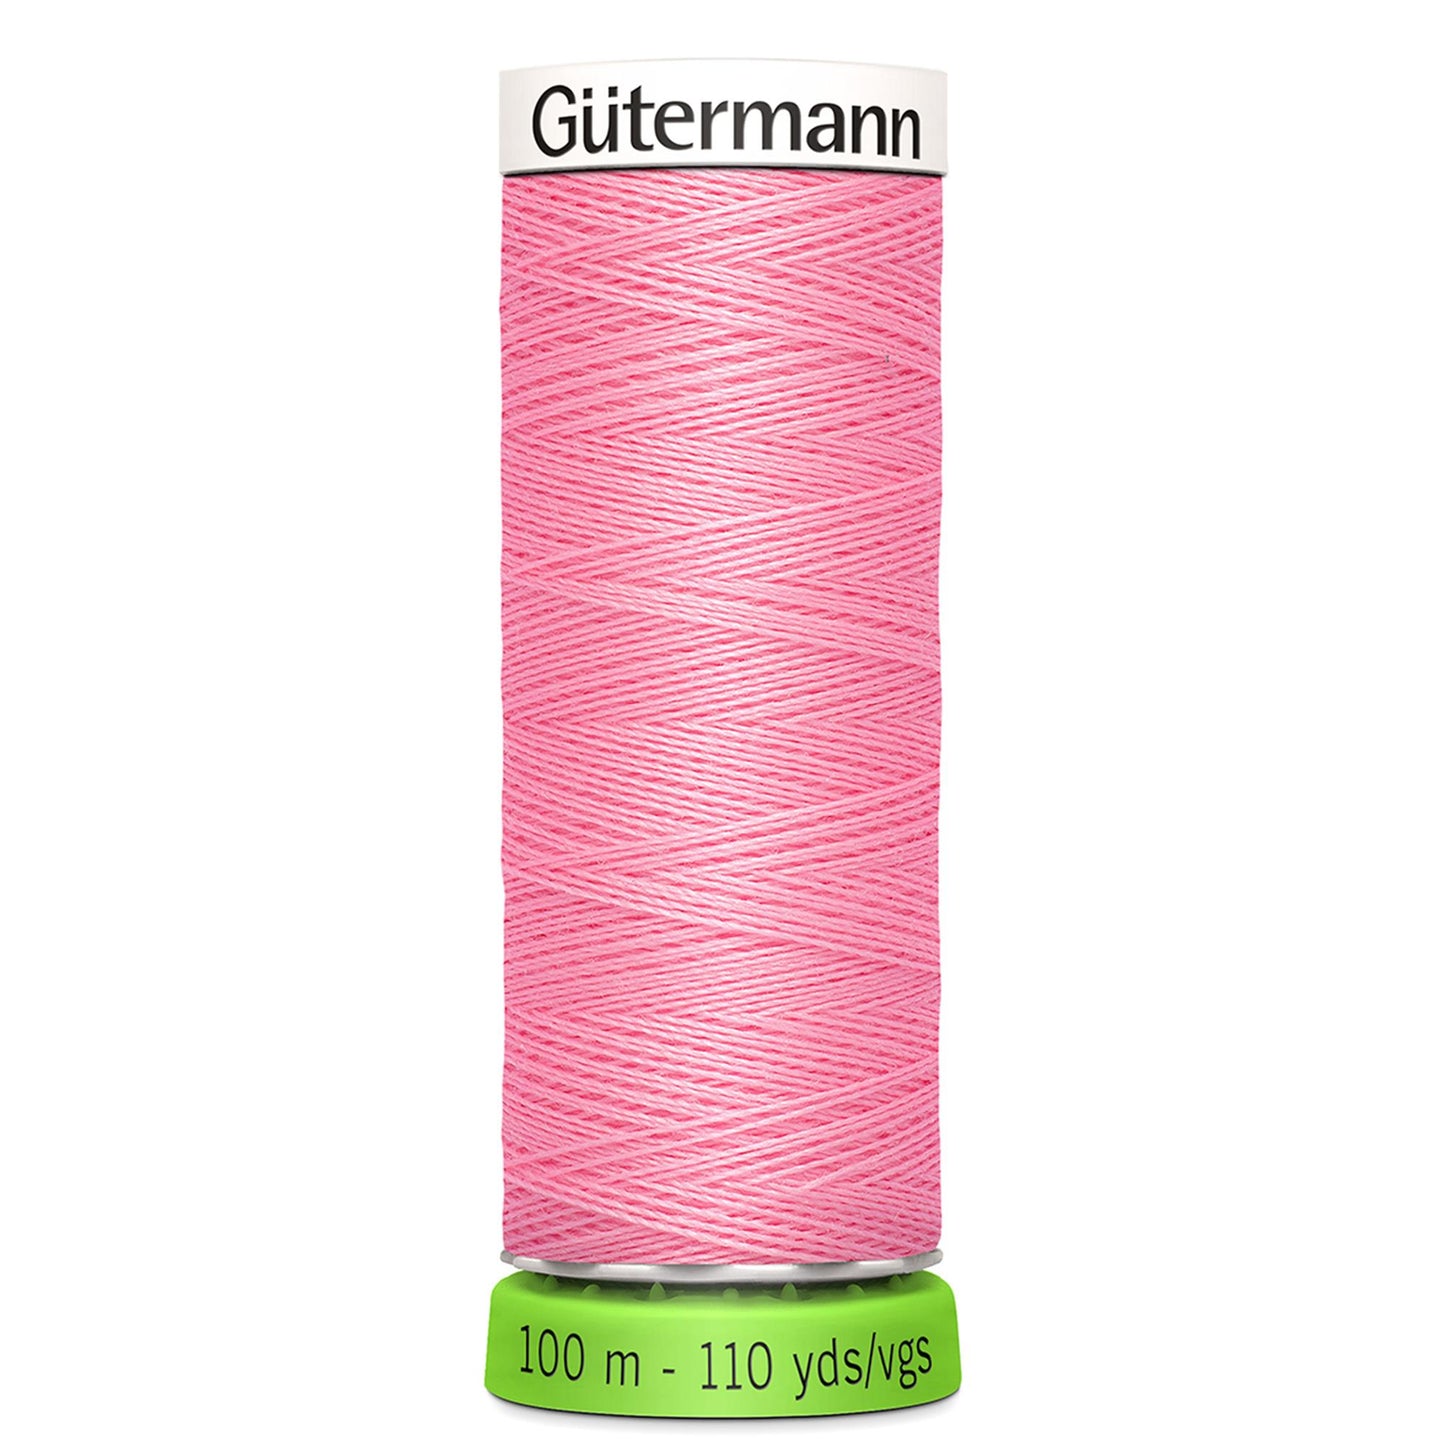 Gütermann rPet (100% Recycled) Sew-All Thread 100m - Col. 758 - Dawn Pink